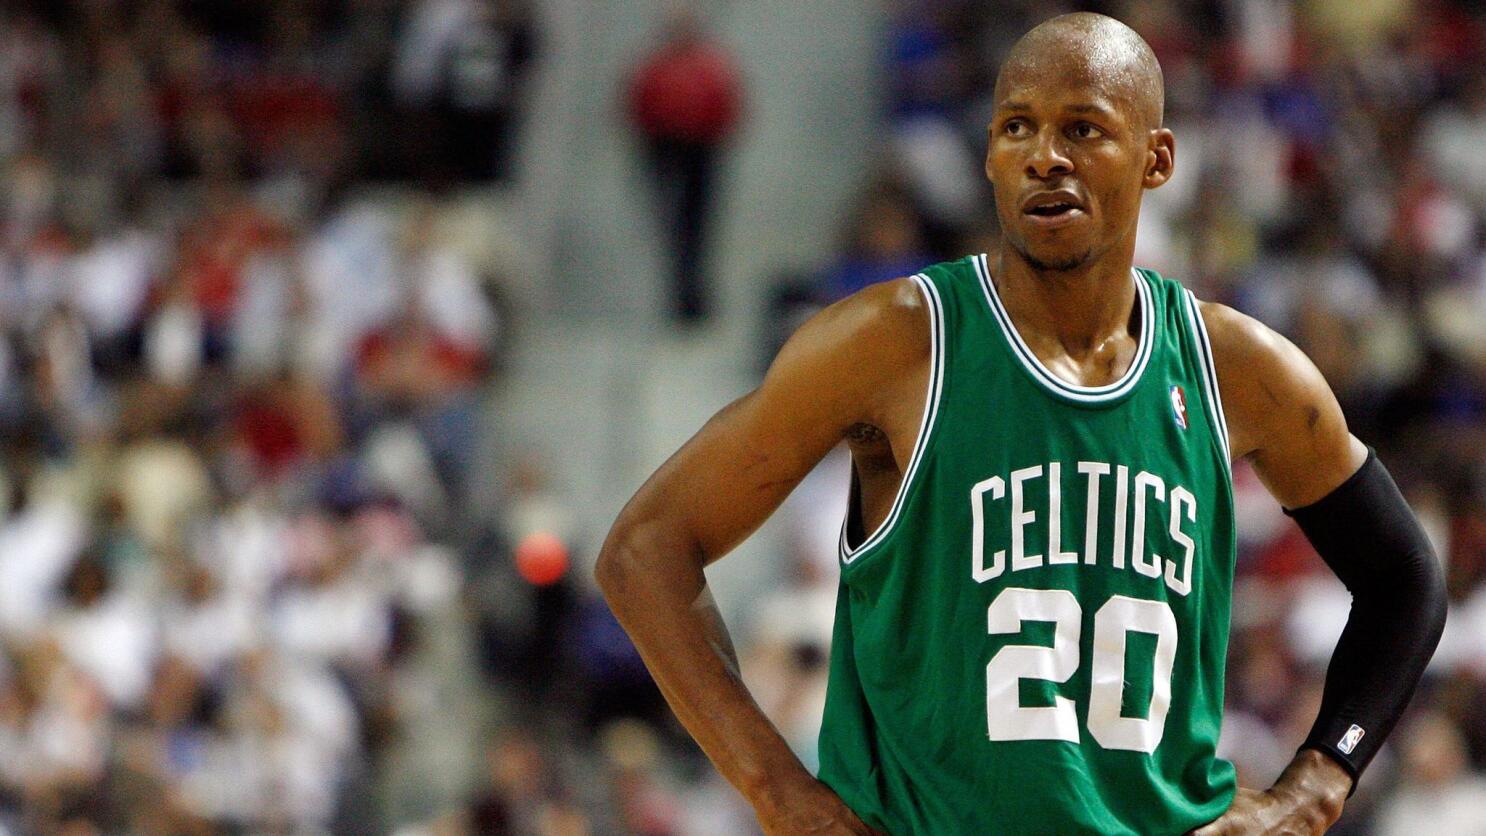 Will the Boston Celtics Retire Rajon Rondo's Jersey?